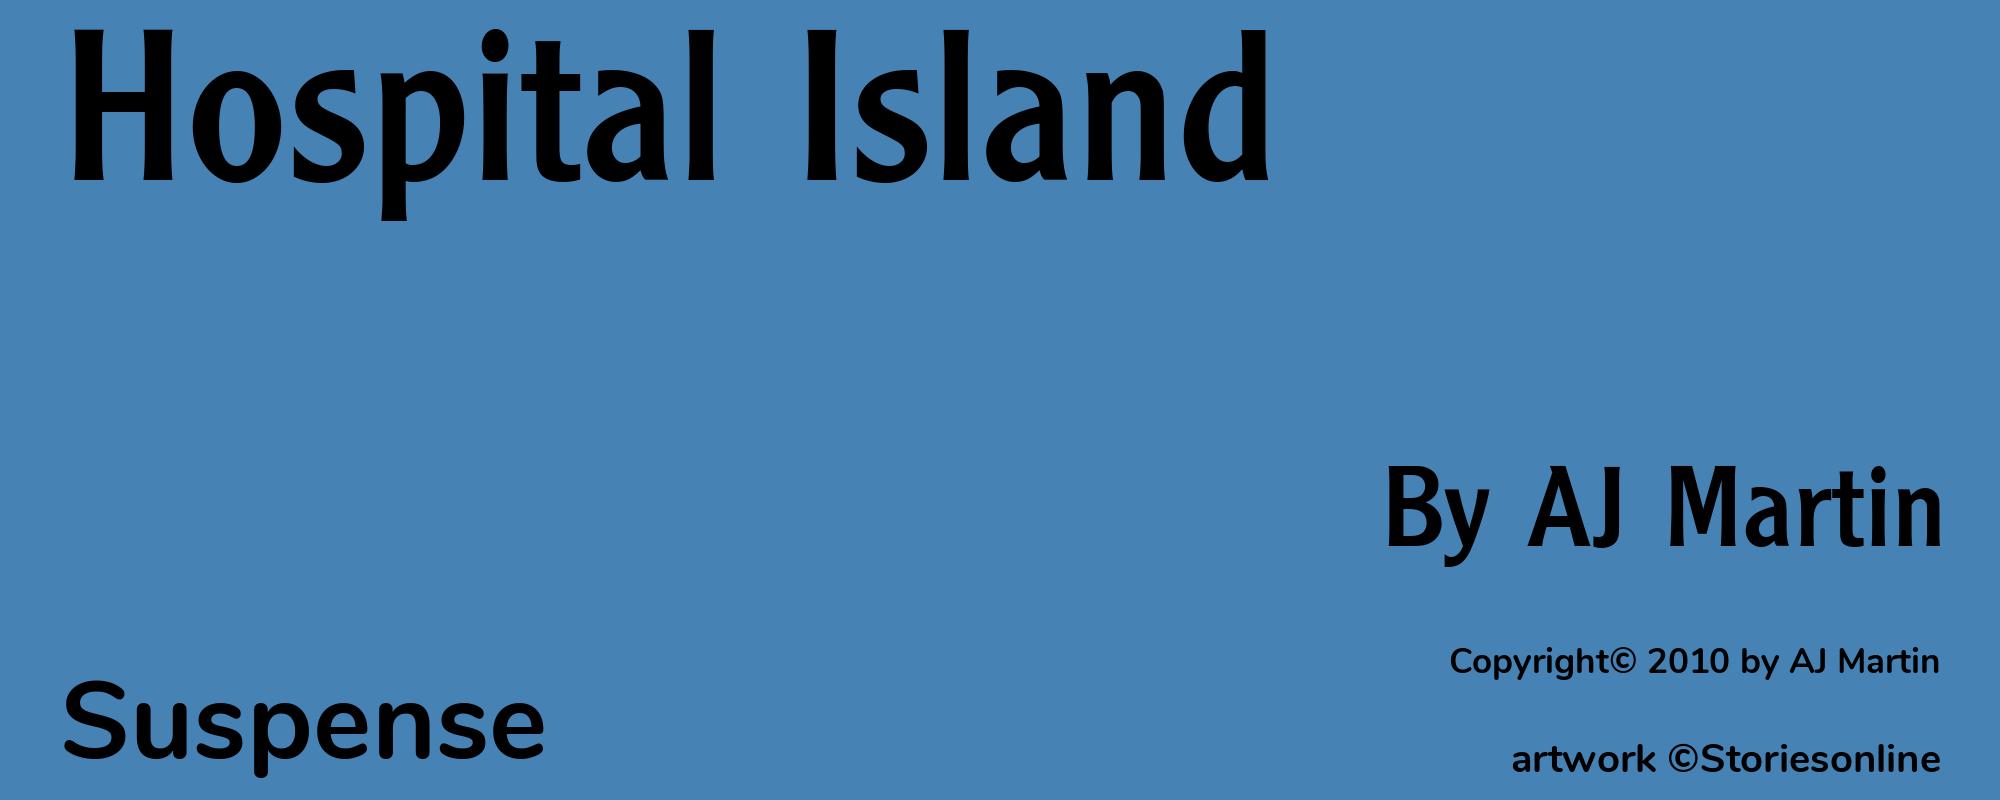 Hospital Island - Cover